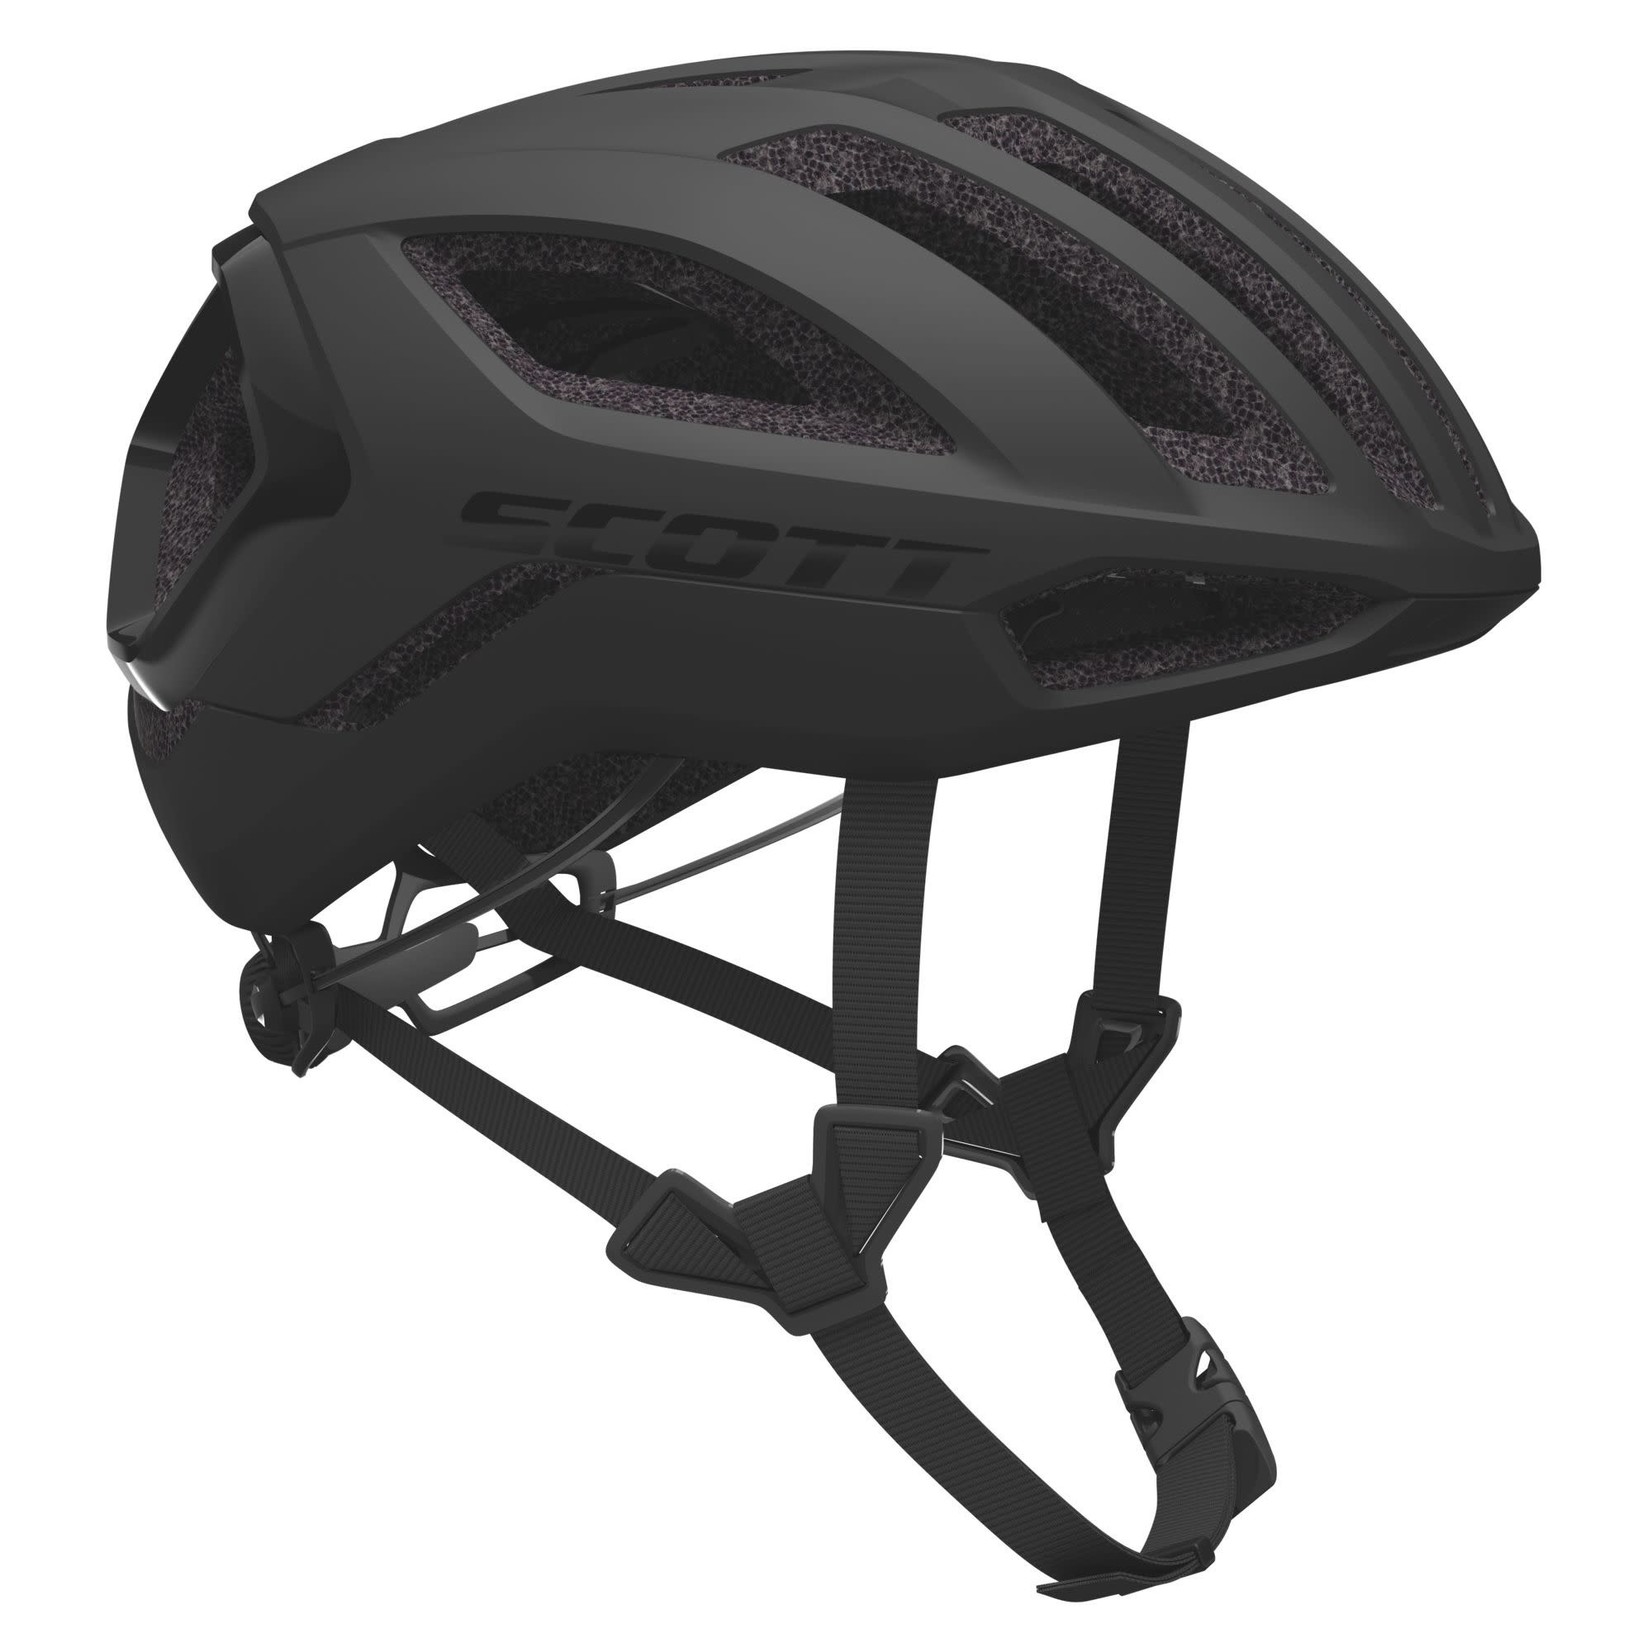 Scott Scott Centric Plus (CE) Helmet Stealth Black